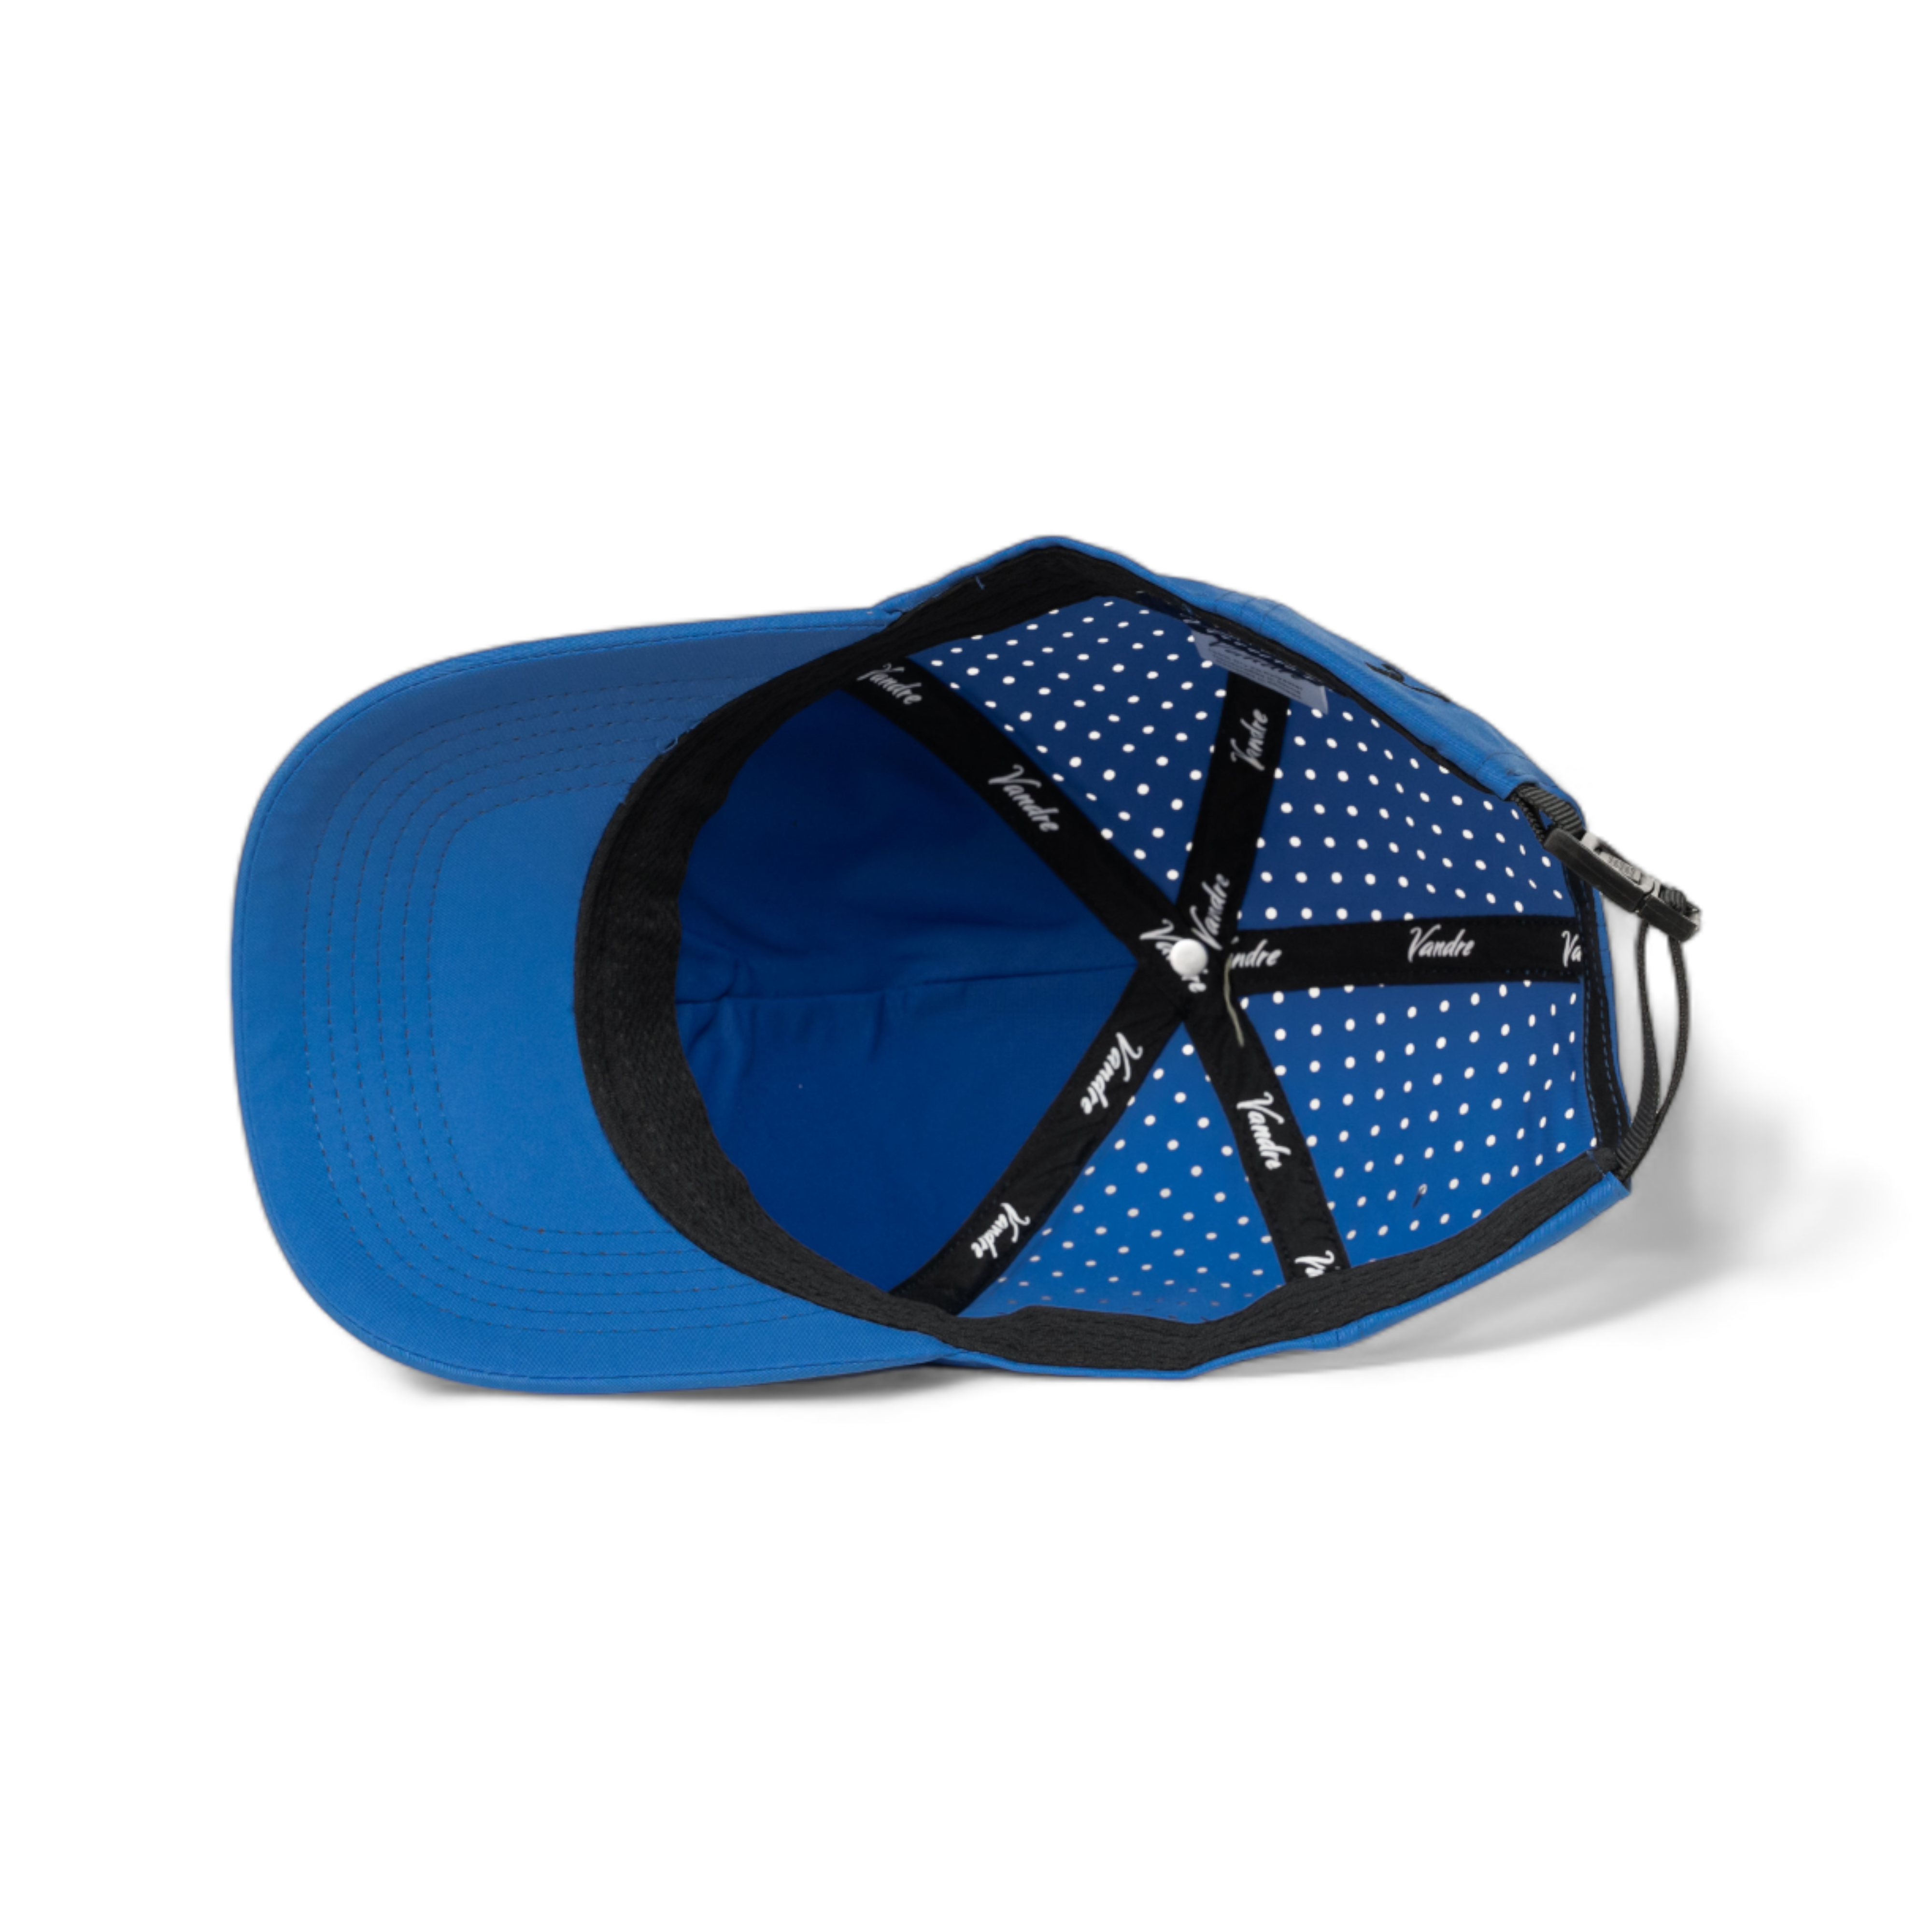 Athletic Dri Fit Baseball Hat Ocean Blue